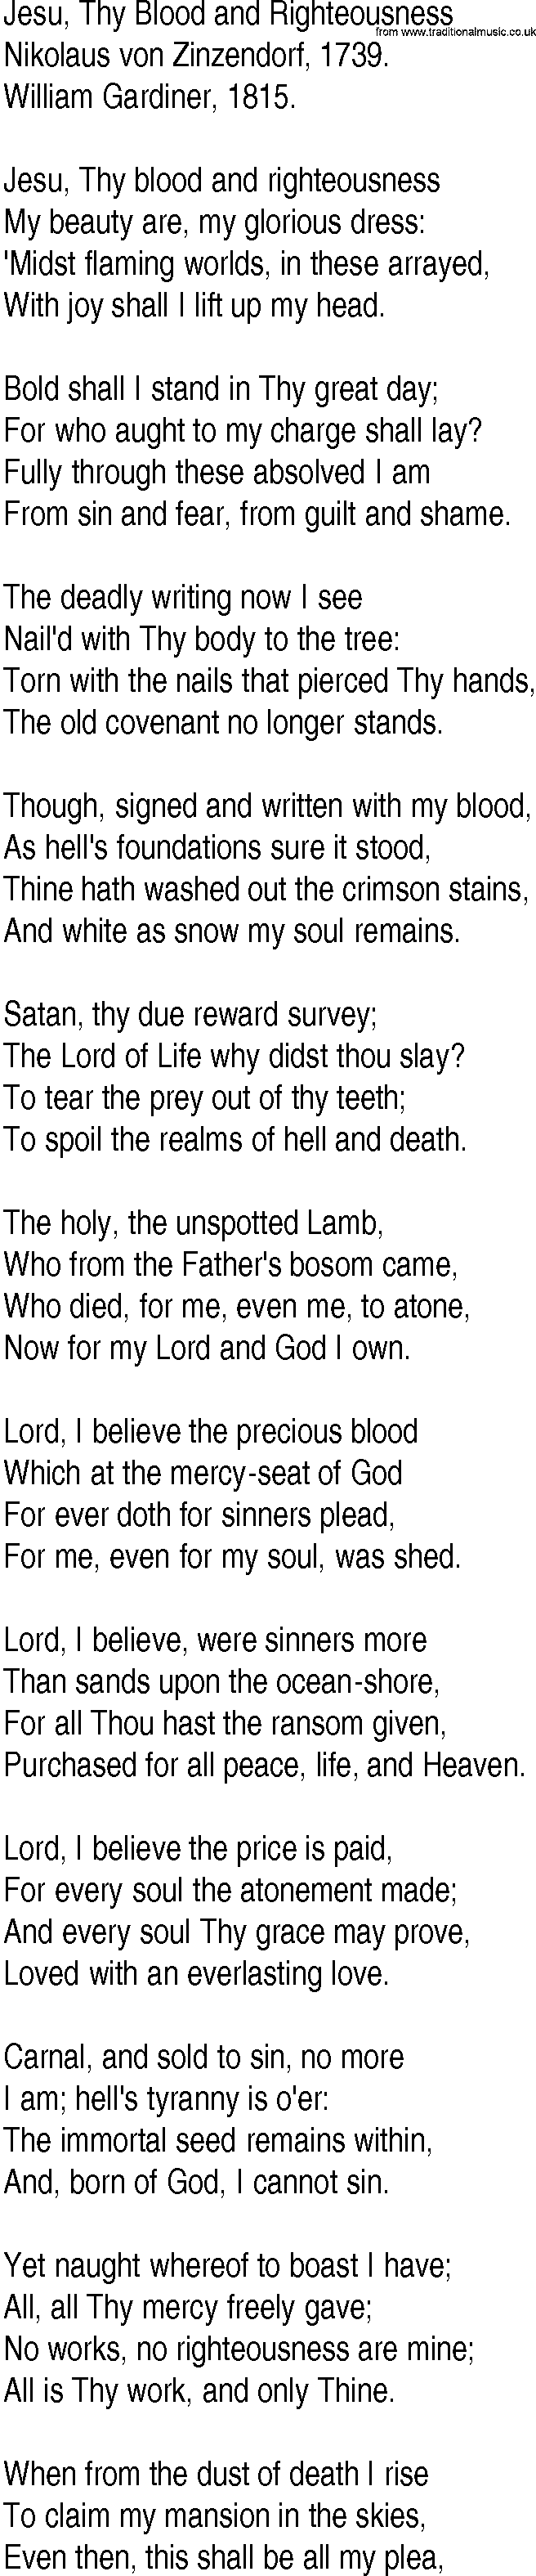 Hymn and Gospel Song: Jesu, Thy Blood and Righteousness by Nikolaus von Zinzendorf lyrics